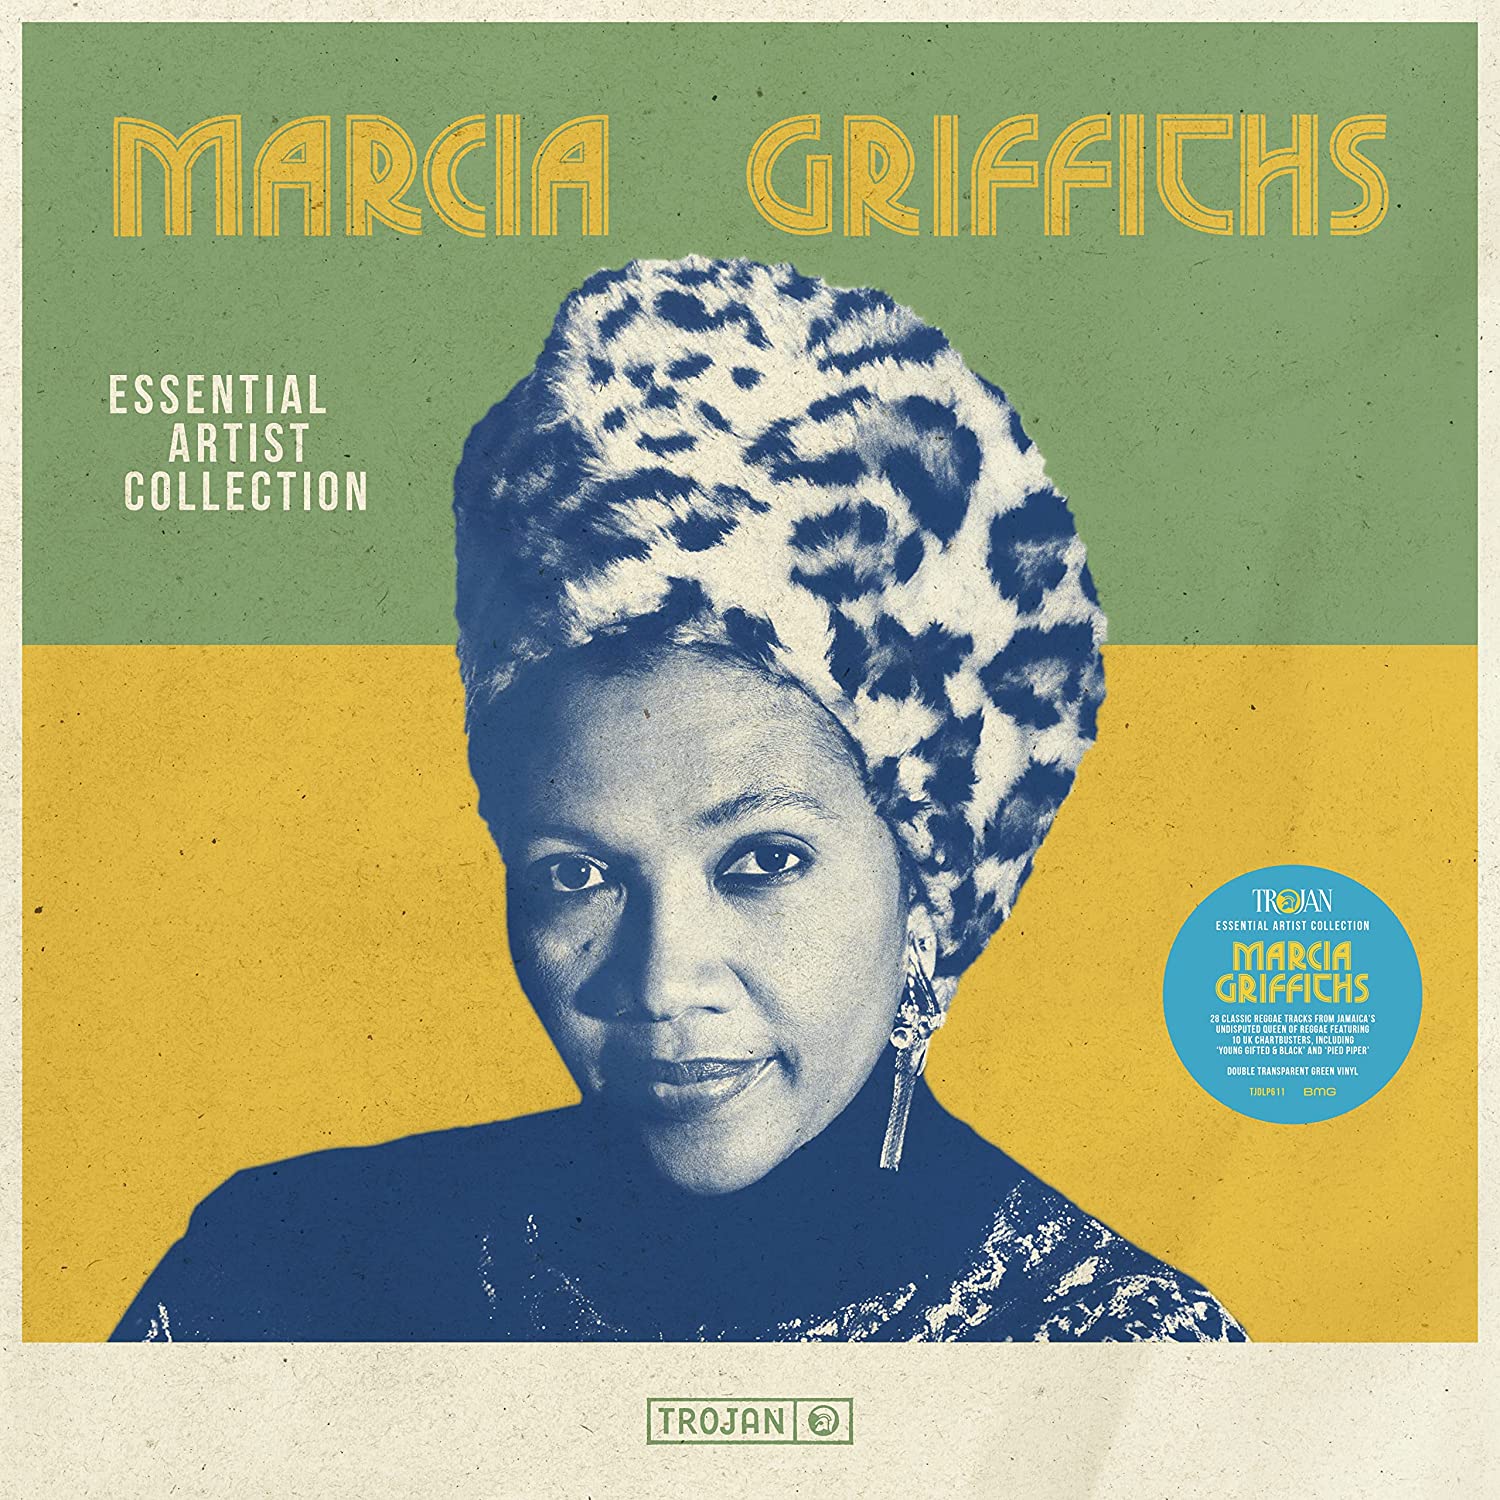 Copertina Vinile 33 giri Essential Artist Collection di Marcia Griffiths